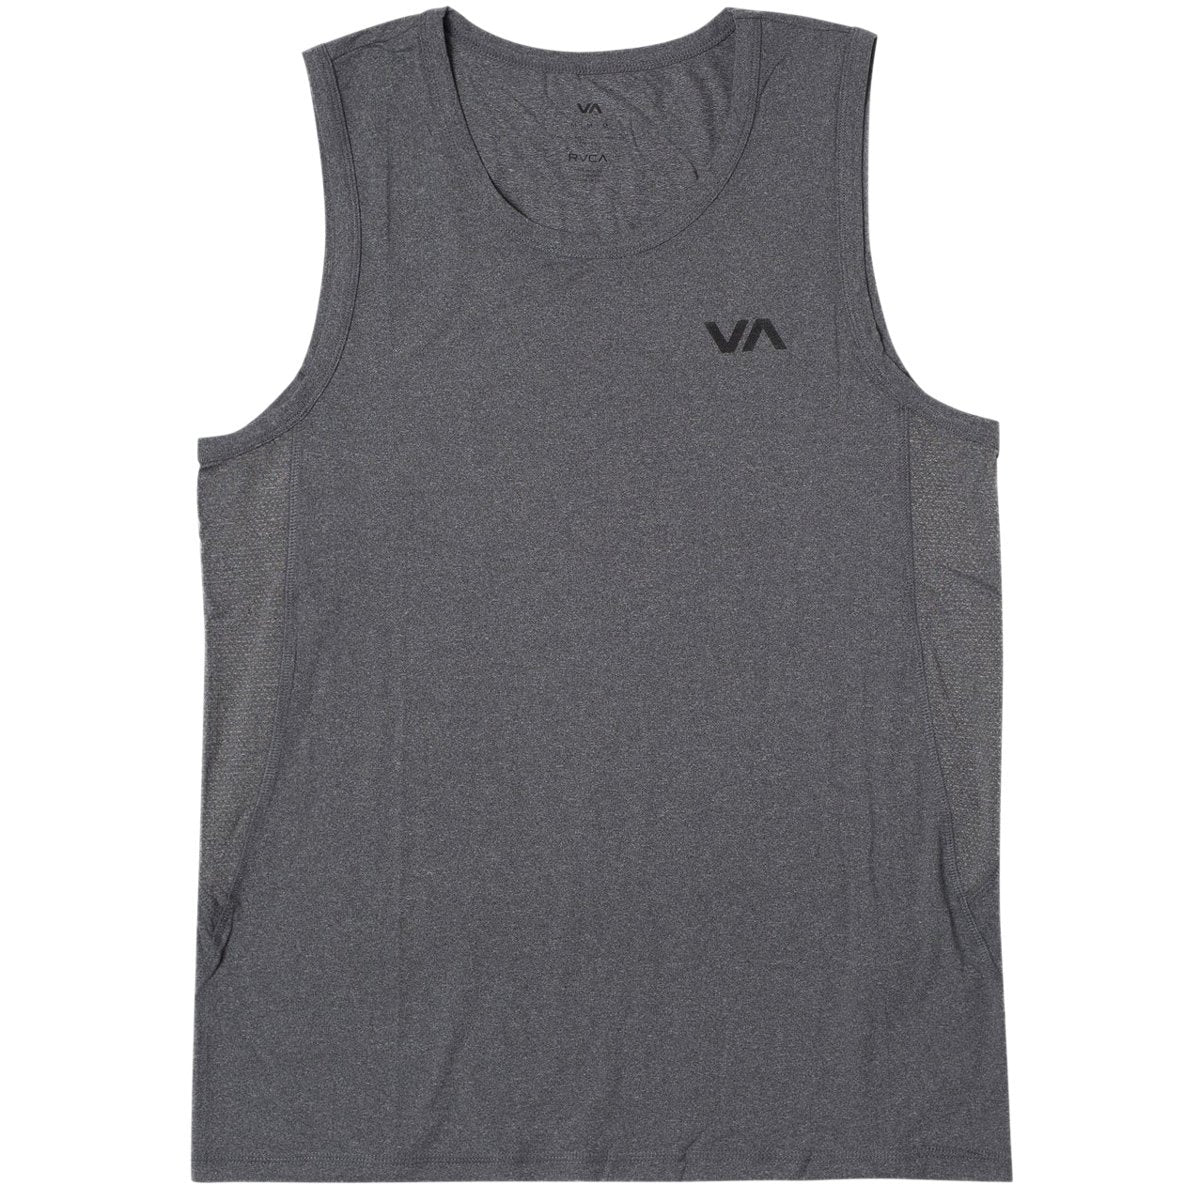 RVCA Sport Vent Sleeve T-Shirt - Charcoal Heather image 1